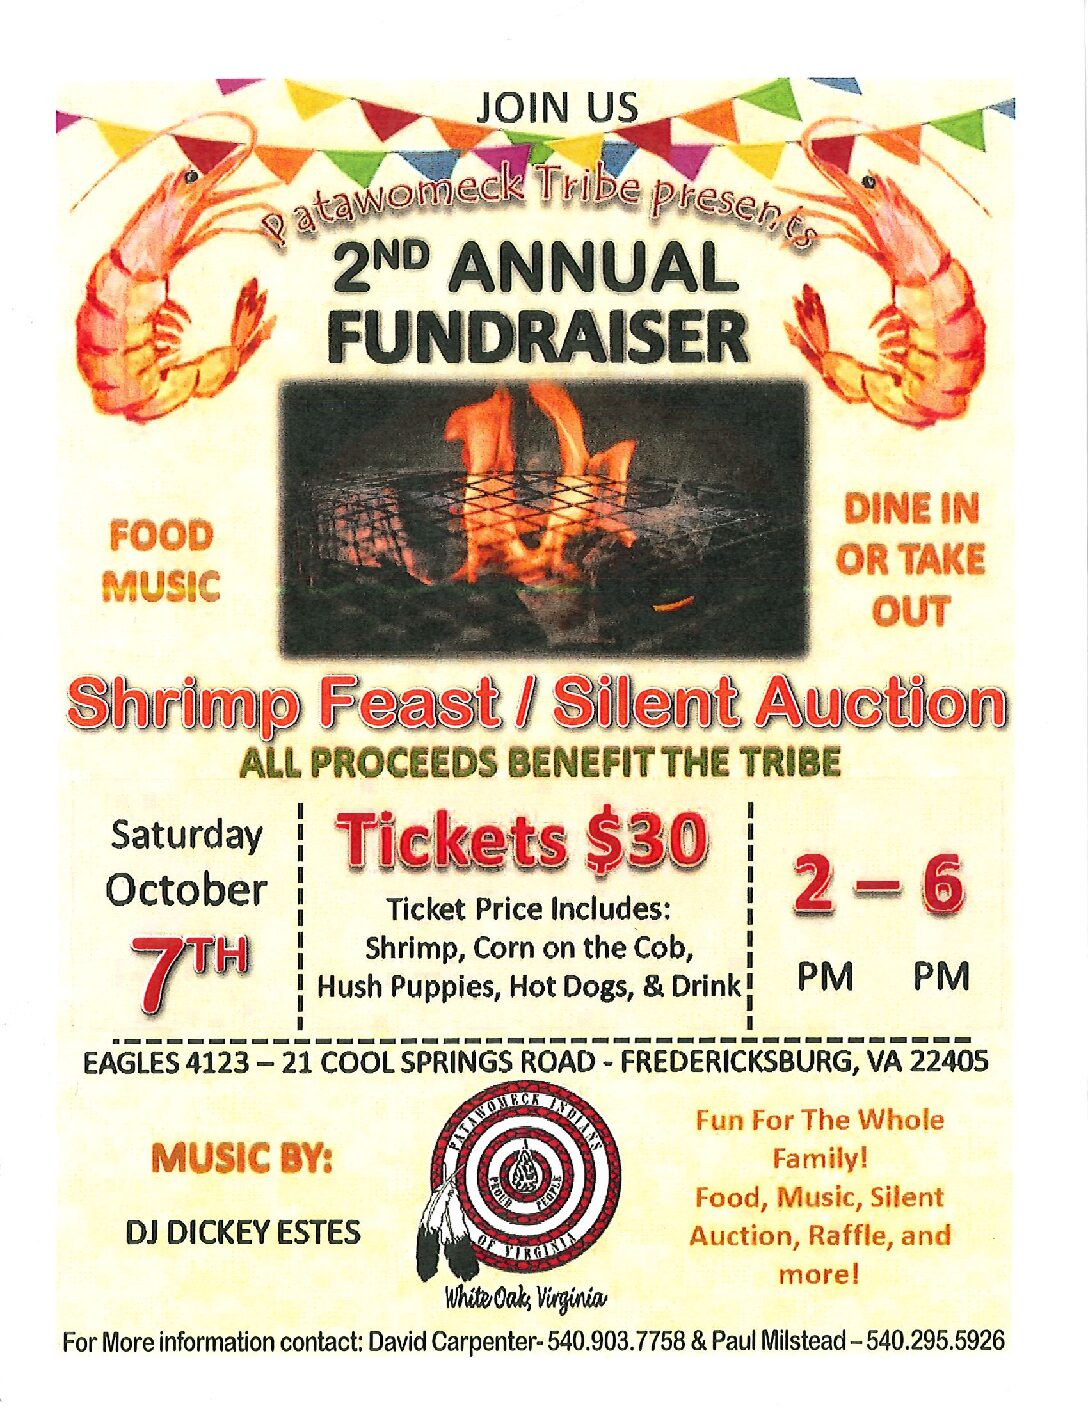 Shrimp Feast and Silent Auction